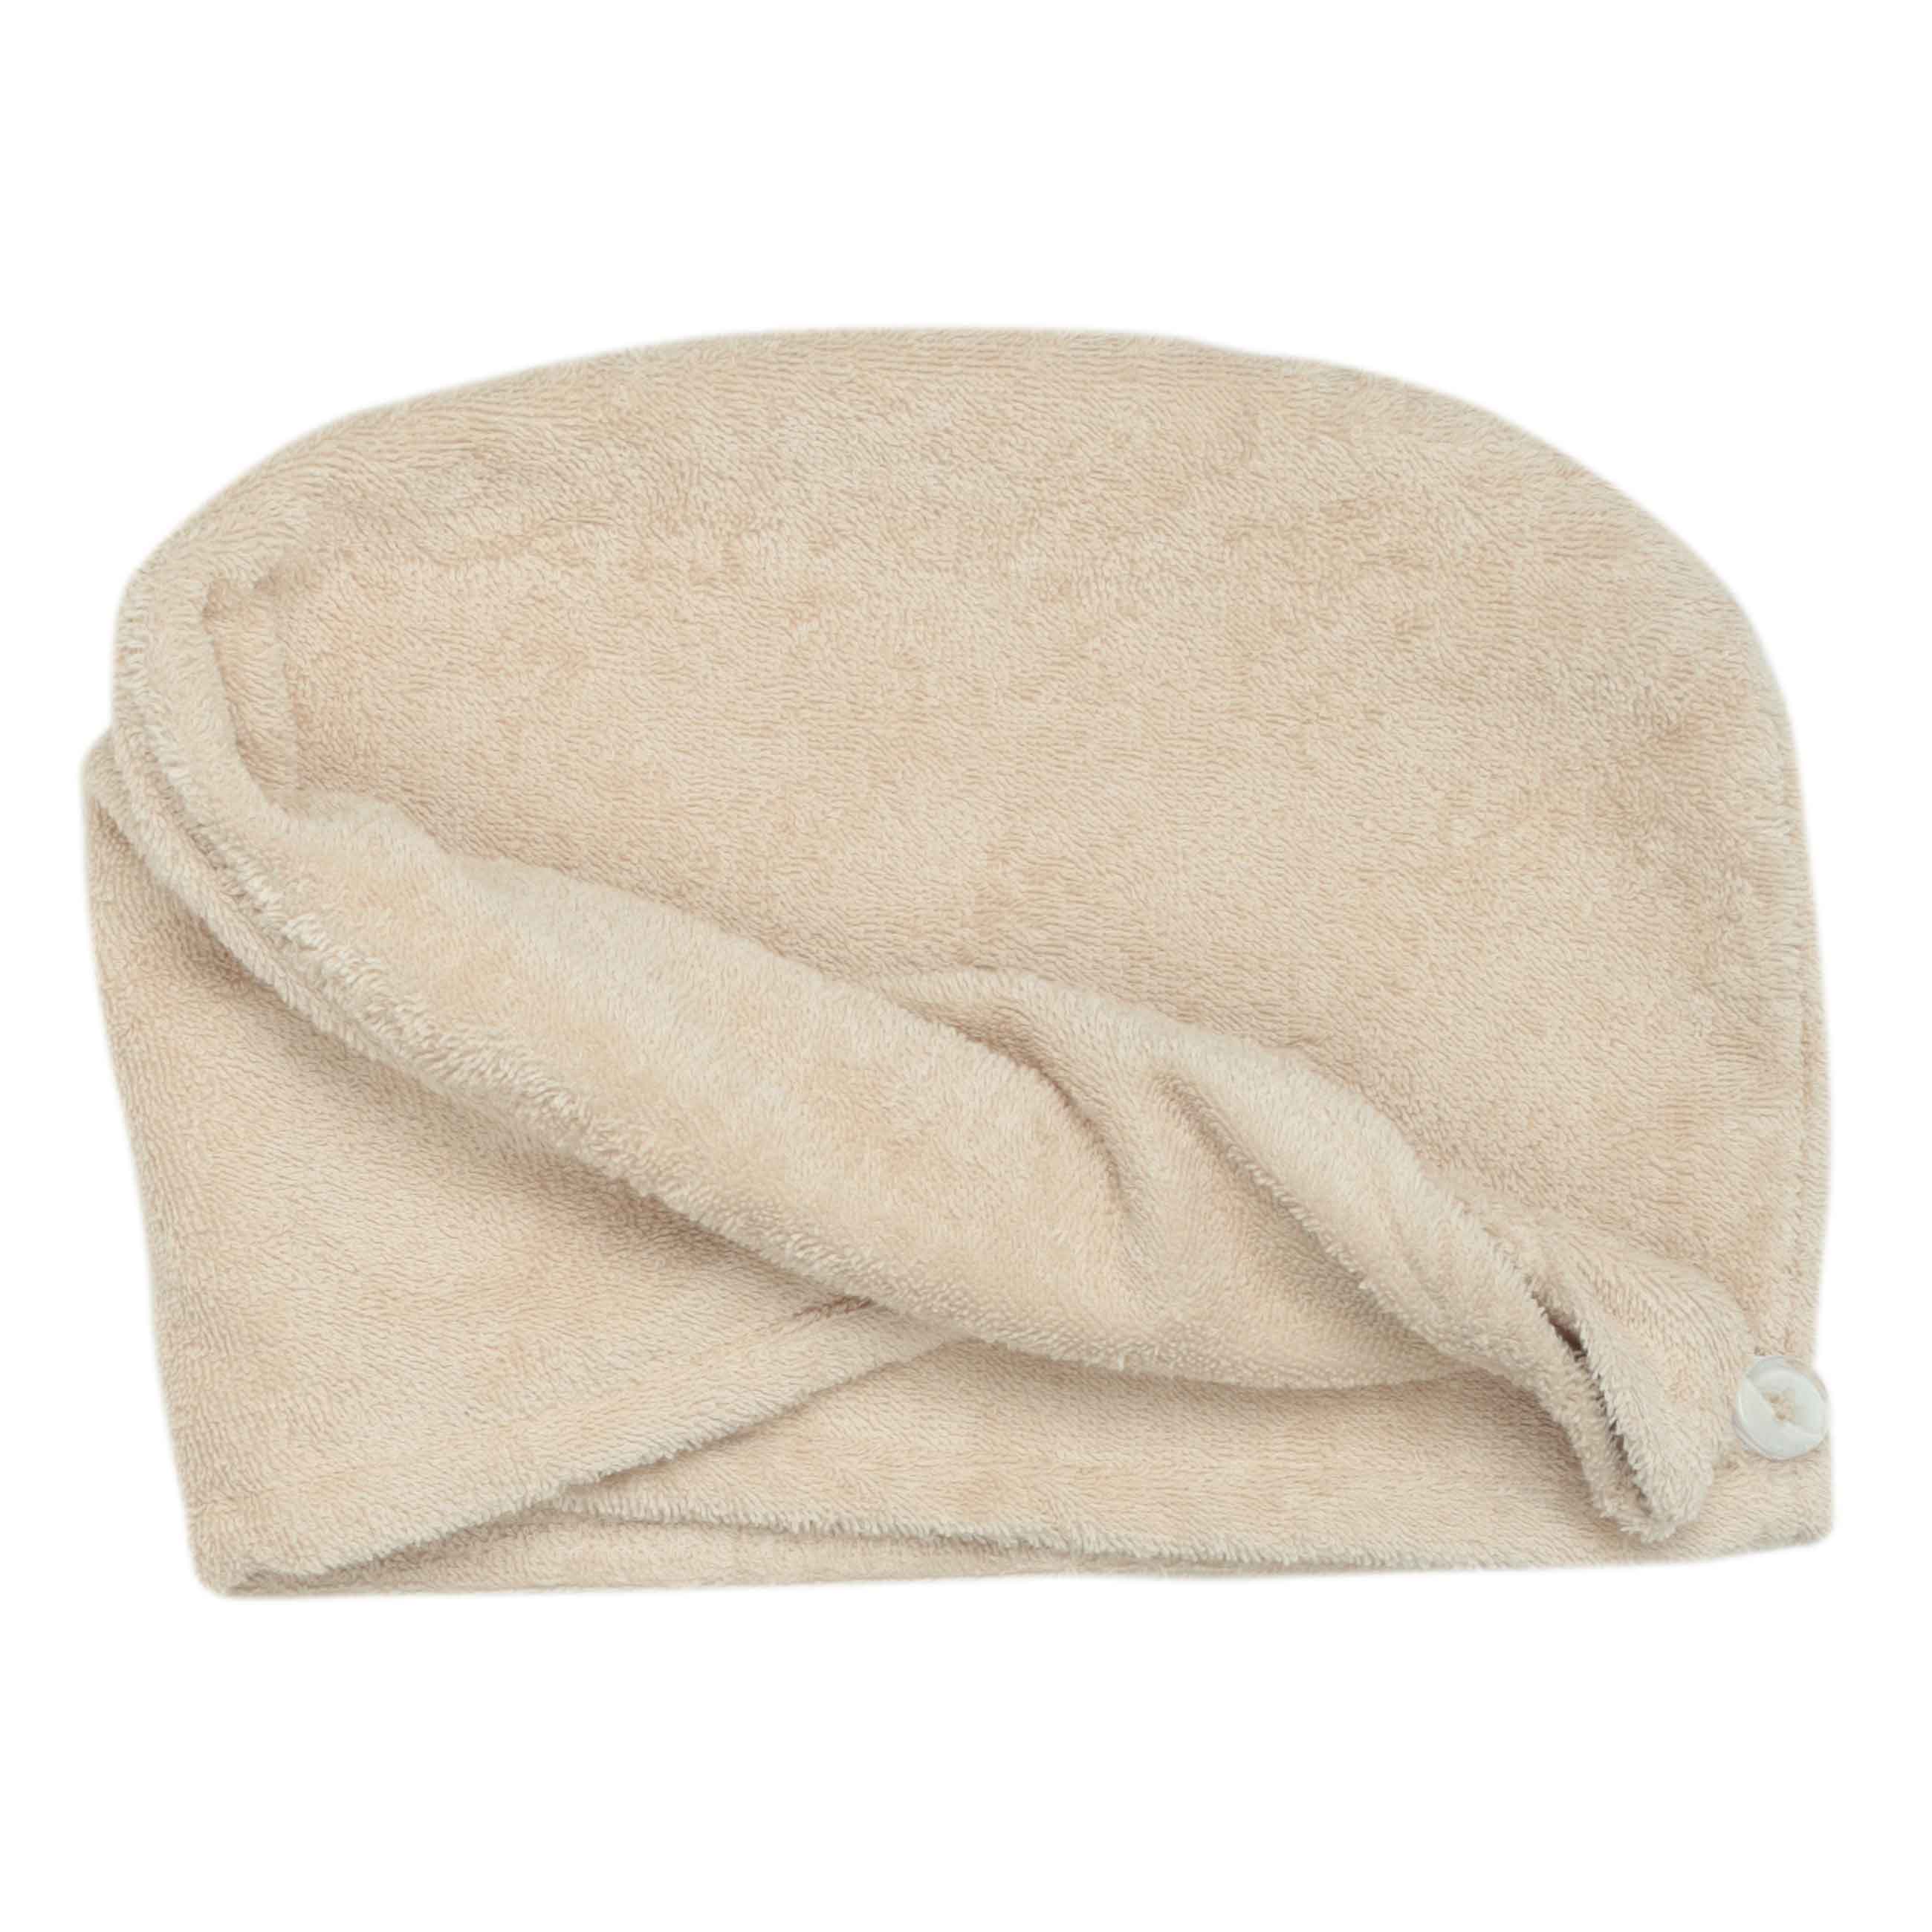 Women's bath set, 2 items, 80x160 / 24x67 cm, pareo towel / turban, cotton, ecru, Spa towel изображение № 5